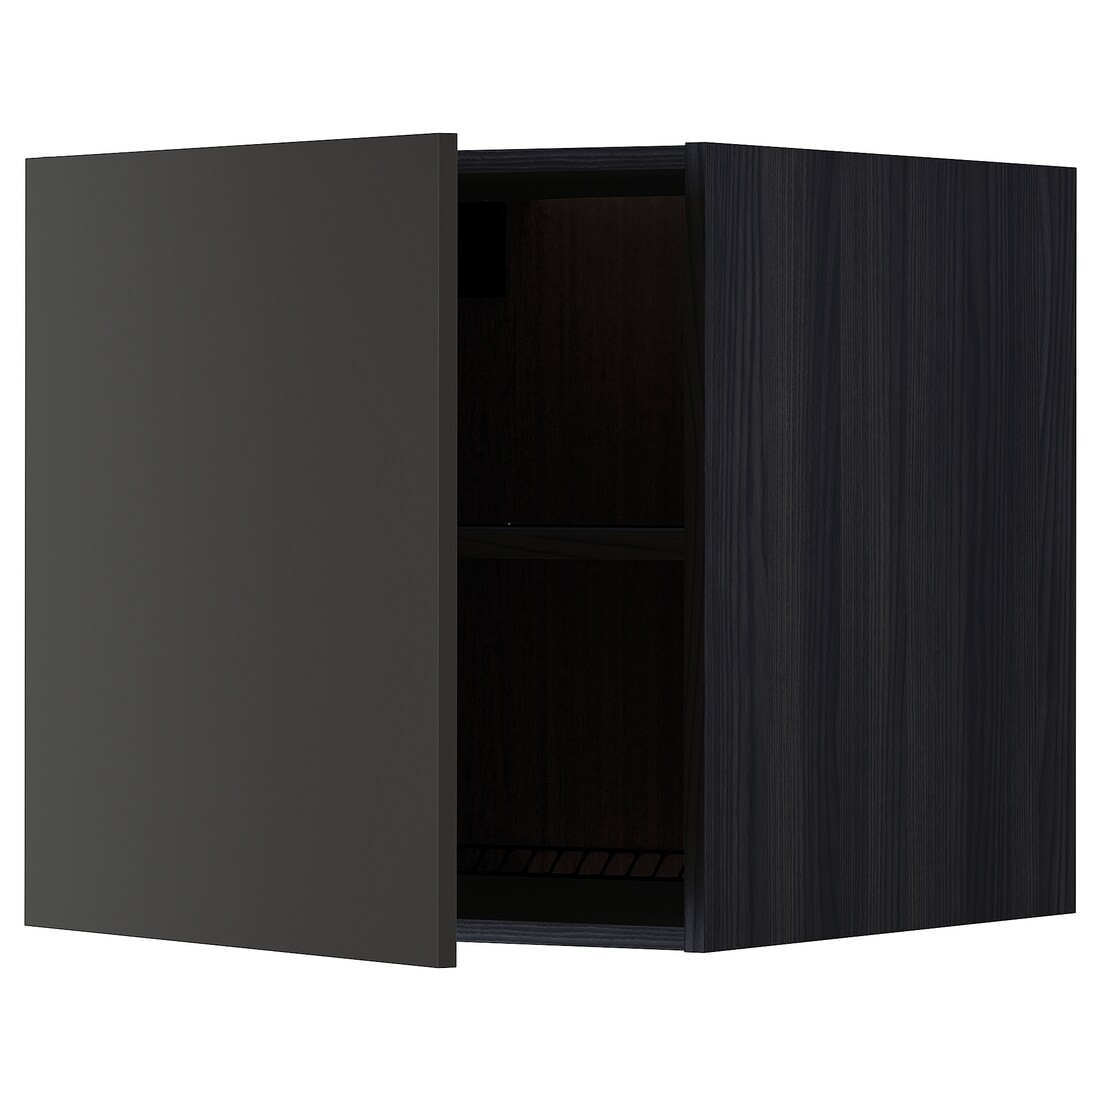 METOD МЕТОД Верхний шкаф для холодильника / морозильника, черный / Nickebo матовый антрацит, 60x60 см